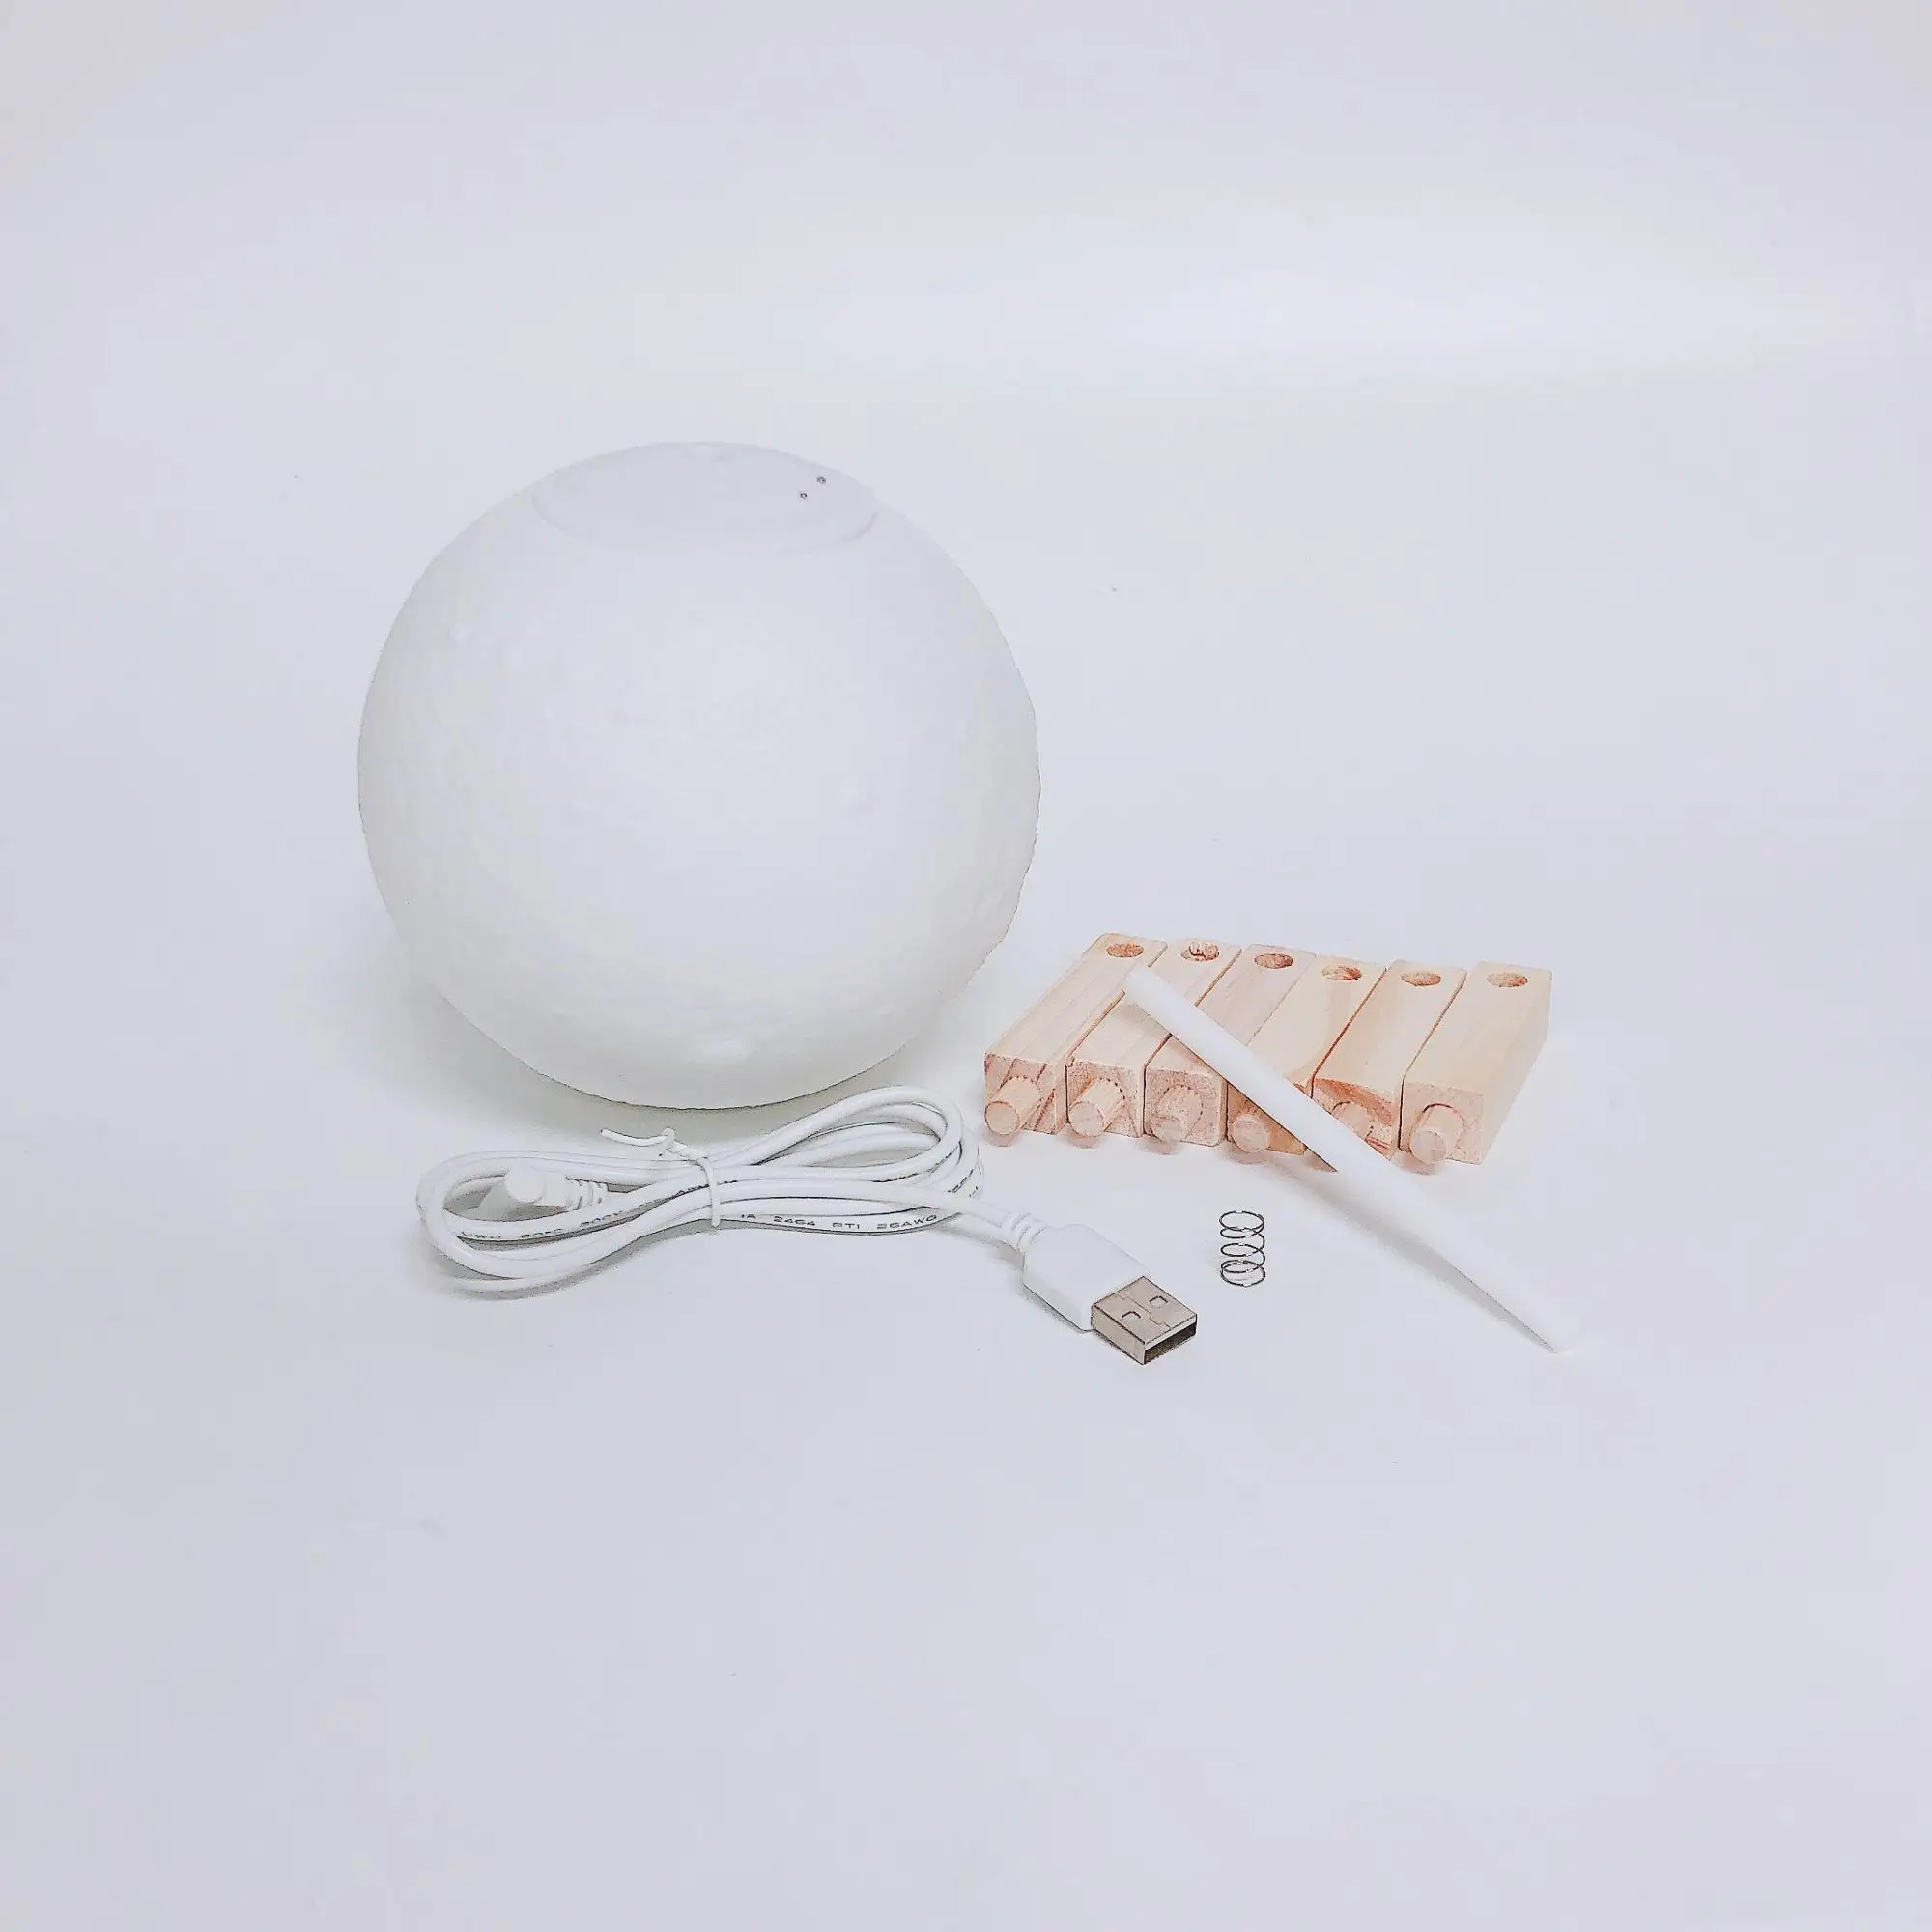 
800ML High Capacity Cool Mist Air Humidifiers USB Moon Night Light Led 3D Moon Lamp Aroma Diffuser 